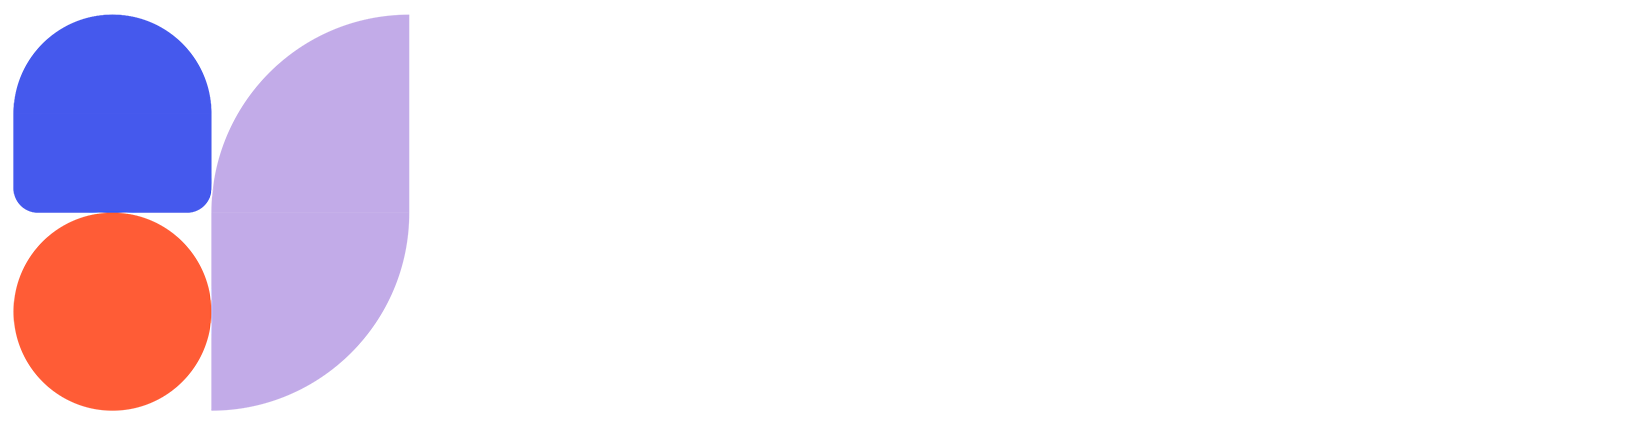 AJ Chambers secondary logo